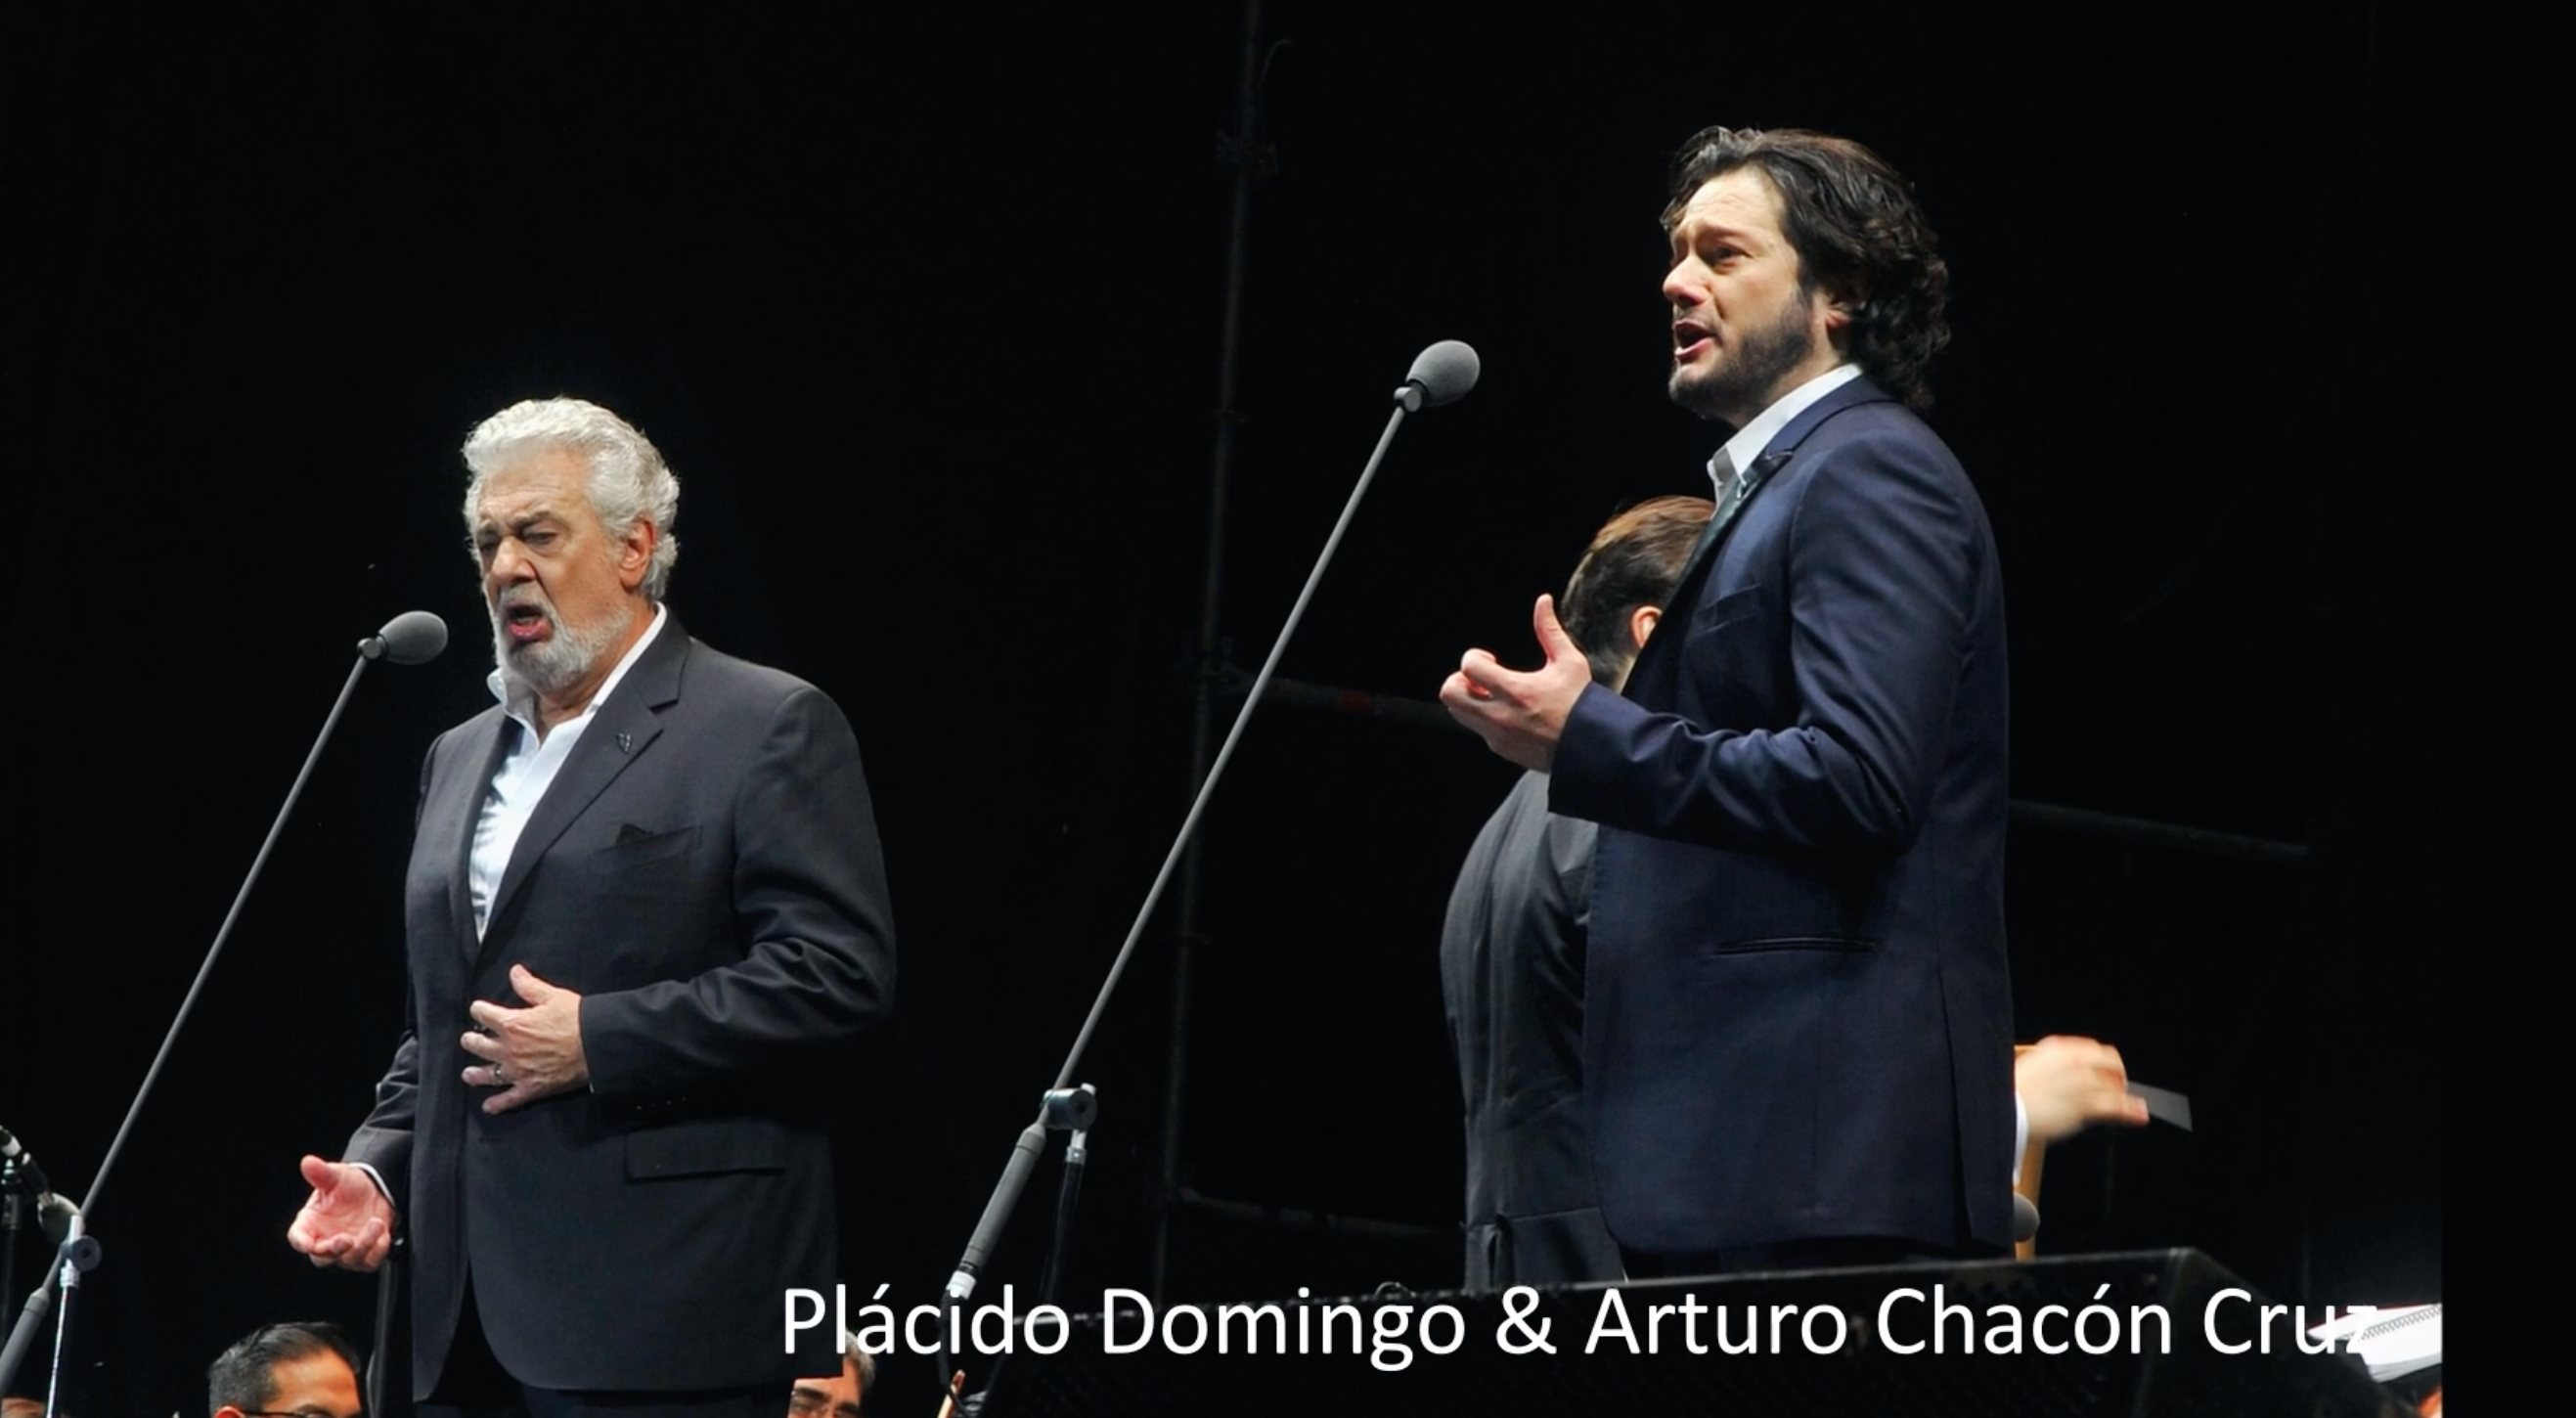 Arturo Chacon Cruz celiac disease beyond celiac opera singer